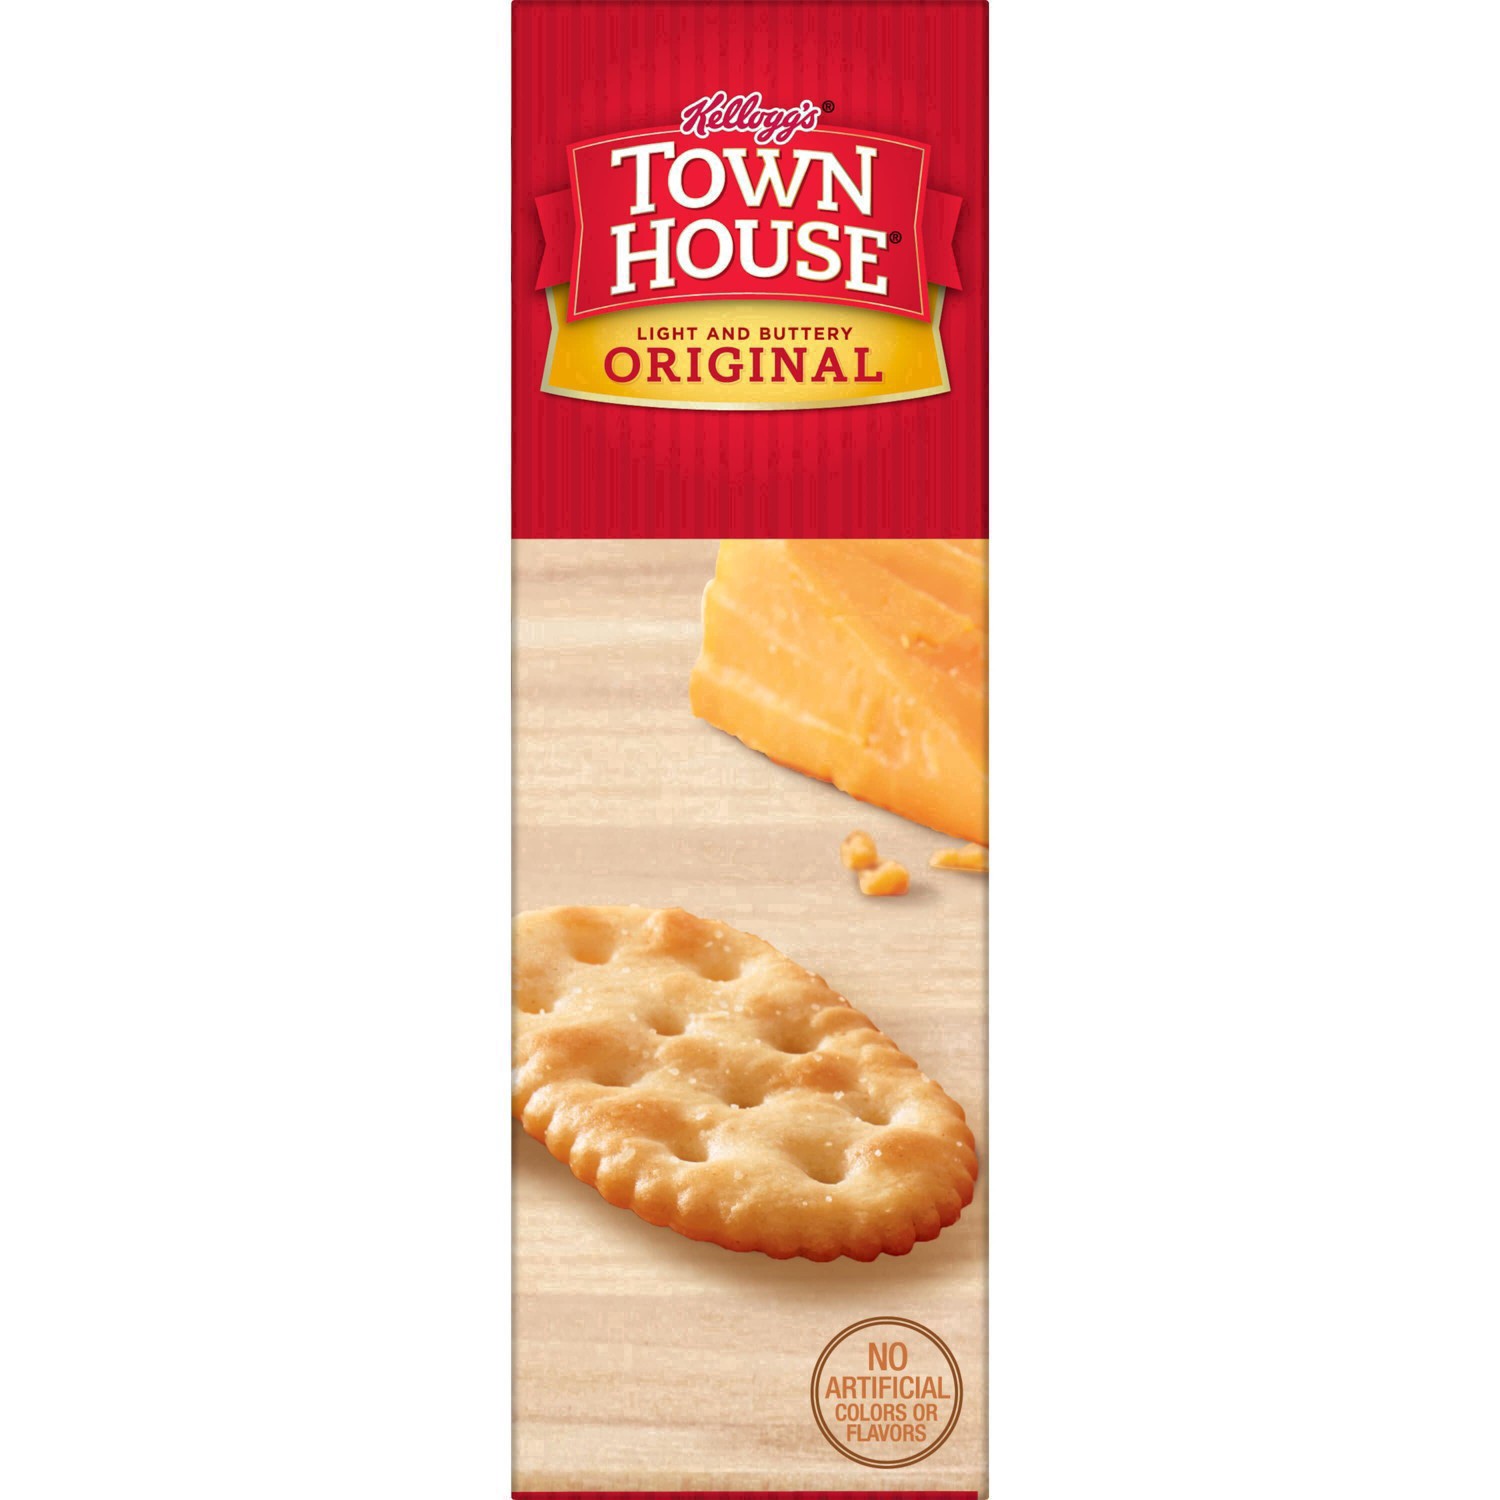 slide 97 of 101, Town House Kellogg's Town House Original Snack Crackers - 13.8oz, 13.8 oz